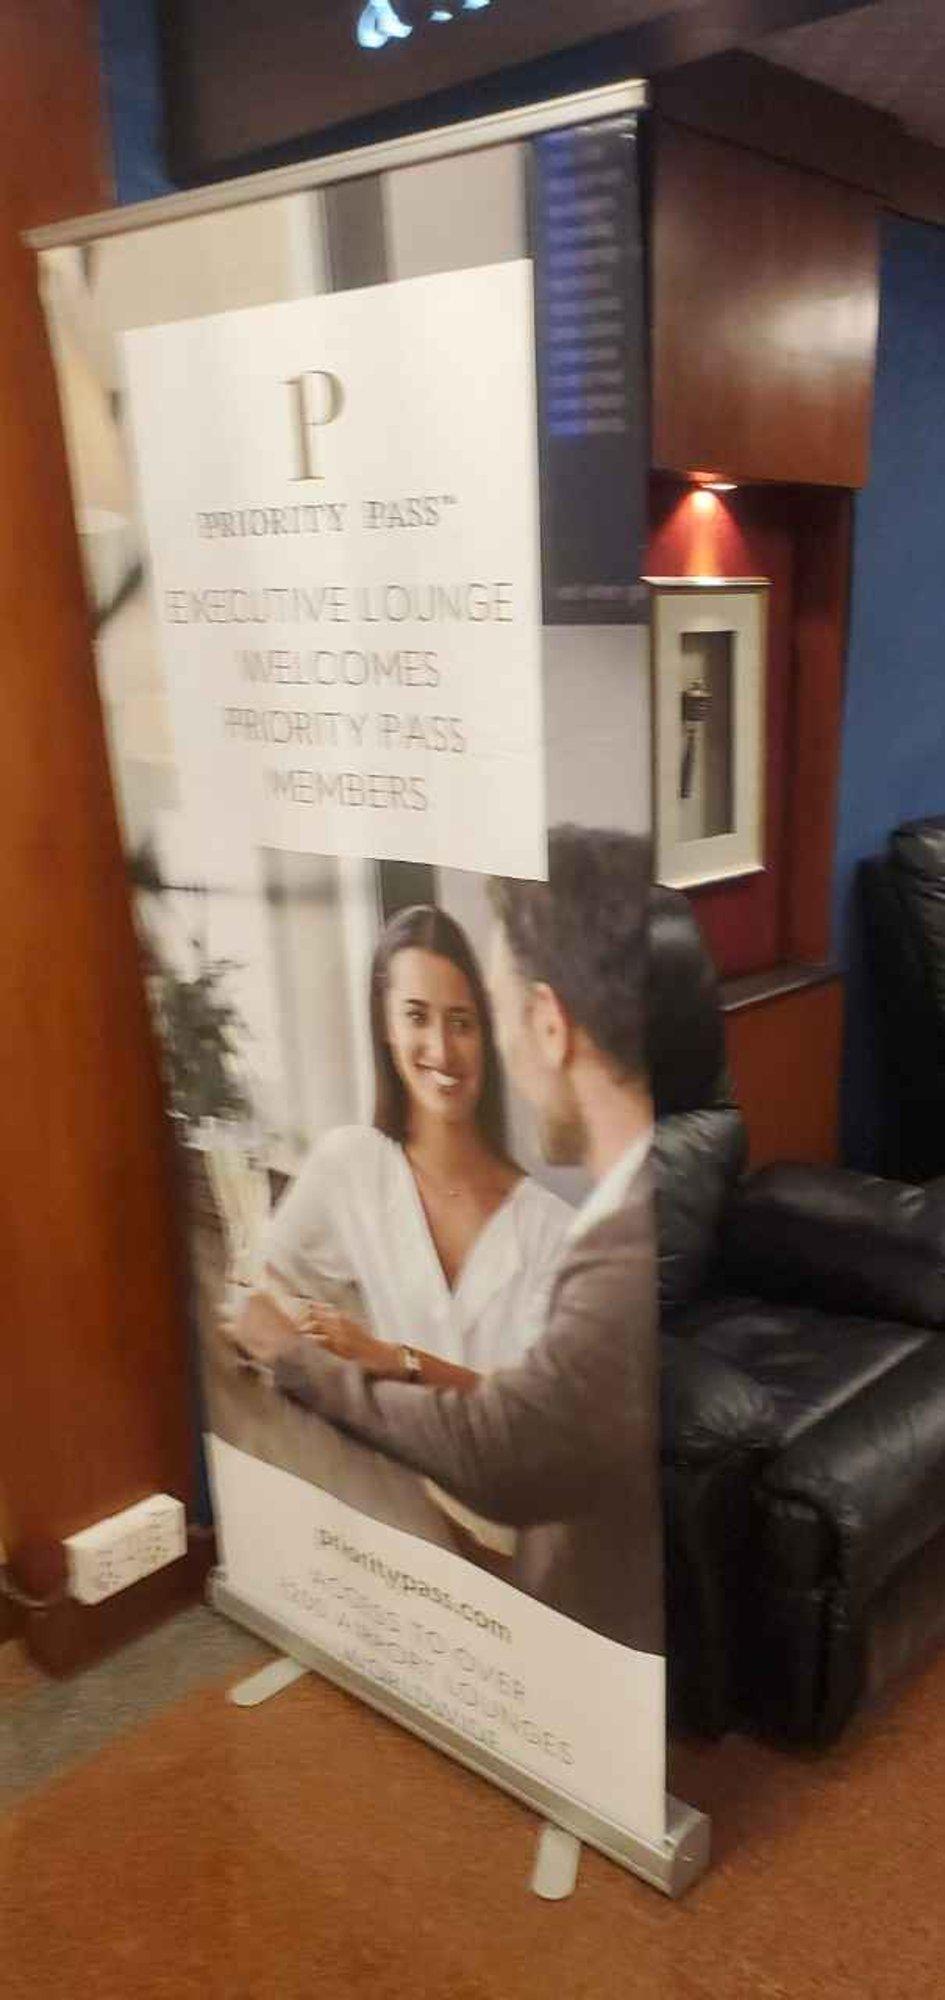 Executive Lounge image 17 of 27